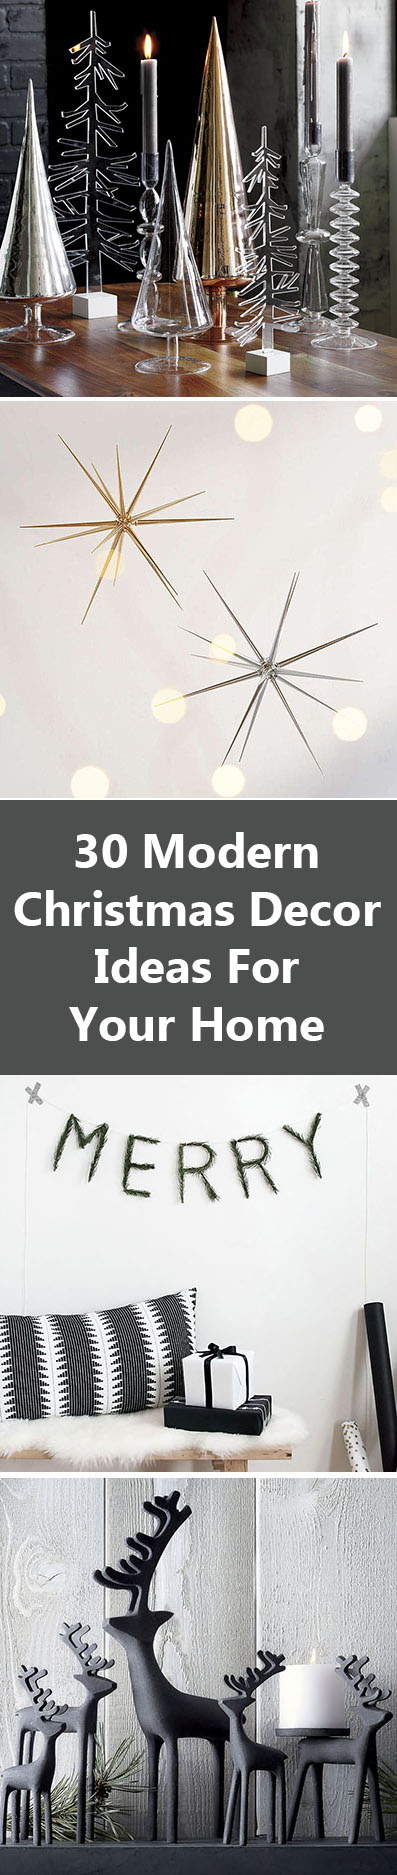 30 Modern Christmas Decor Ideas For Your Home